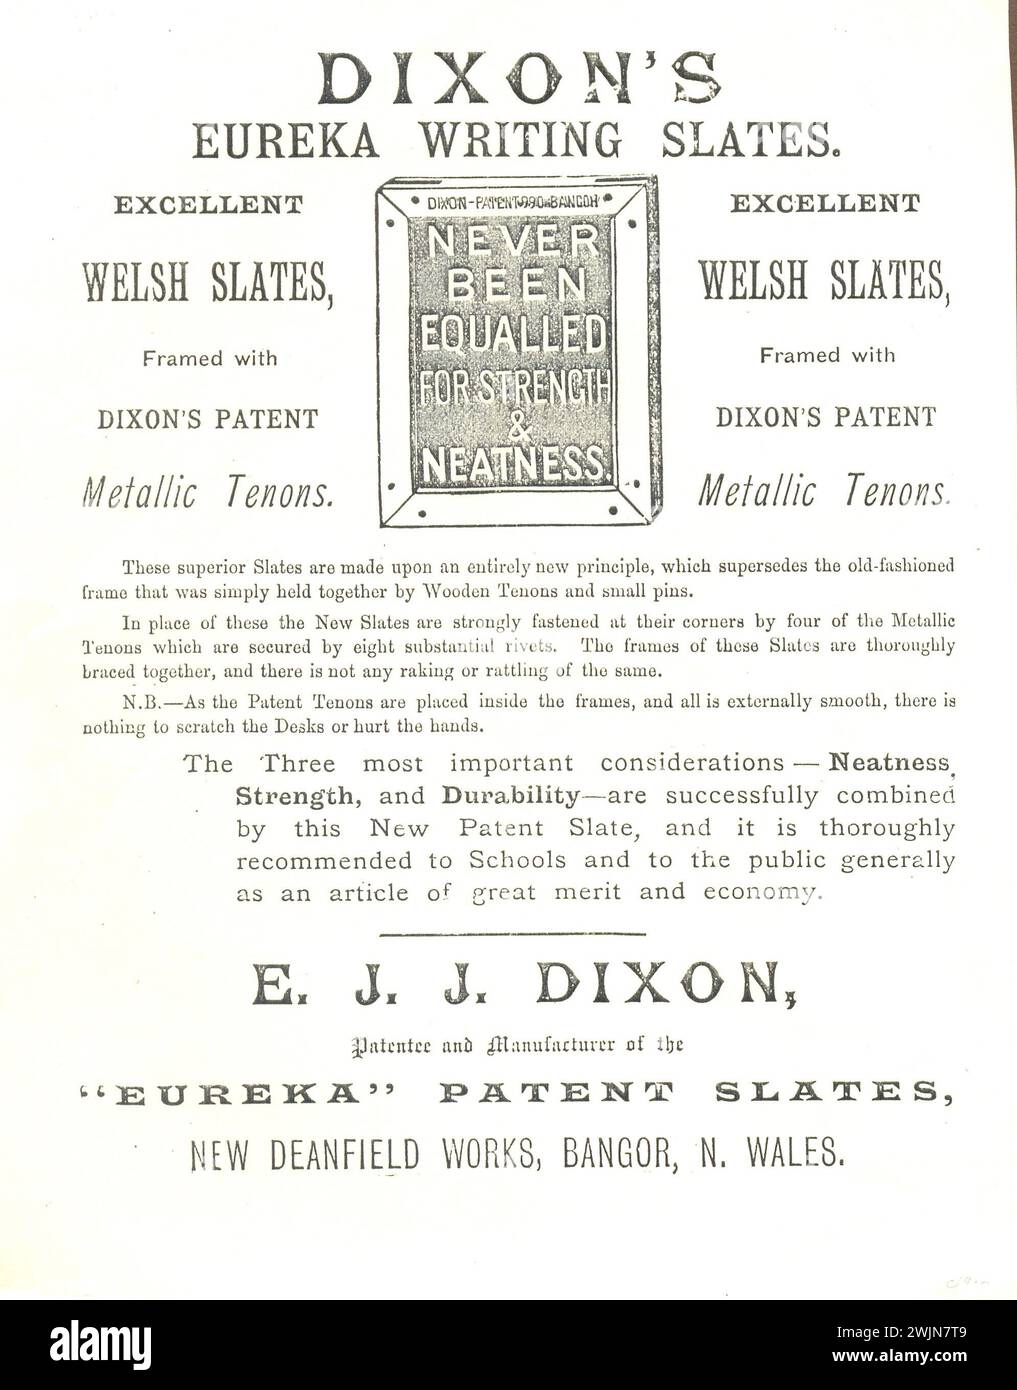 Advertising leaflet for Dixon's Eureka Writing Slates, Bangor, N. Wales circa 1895 Stock Photo